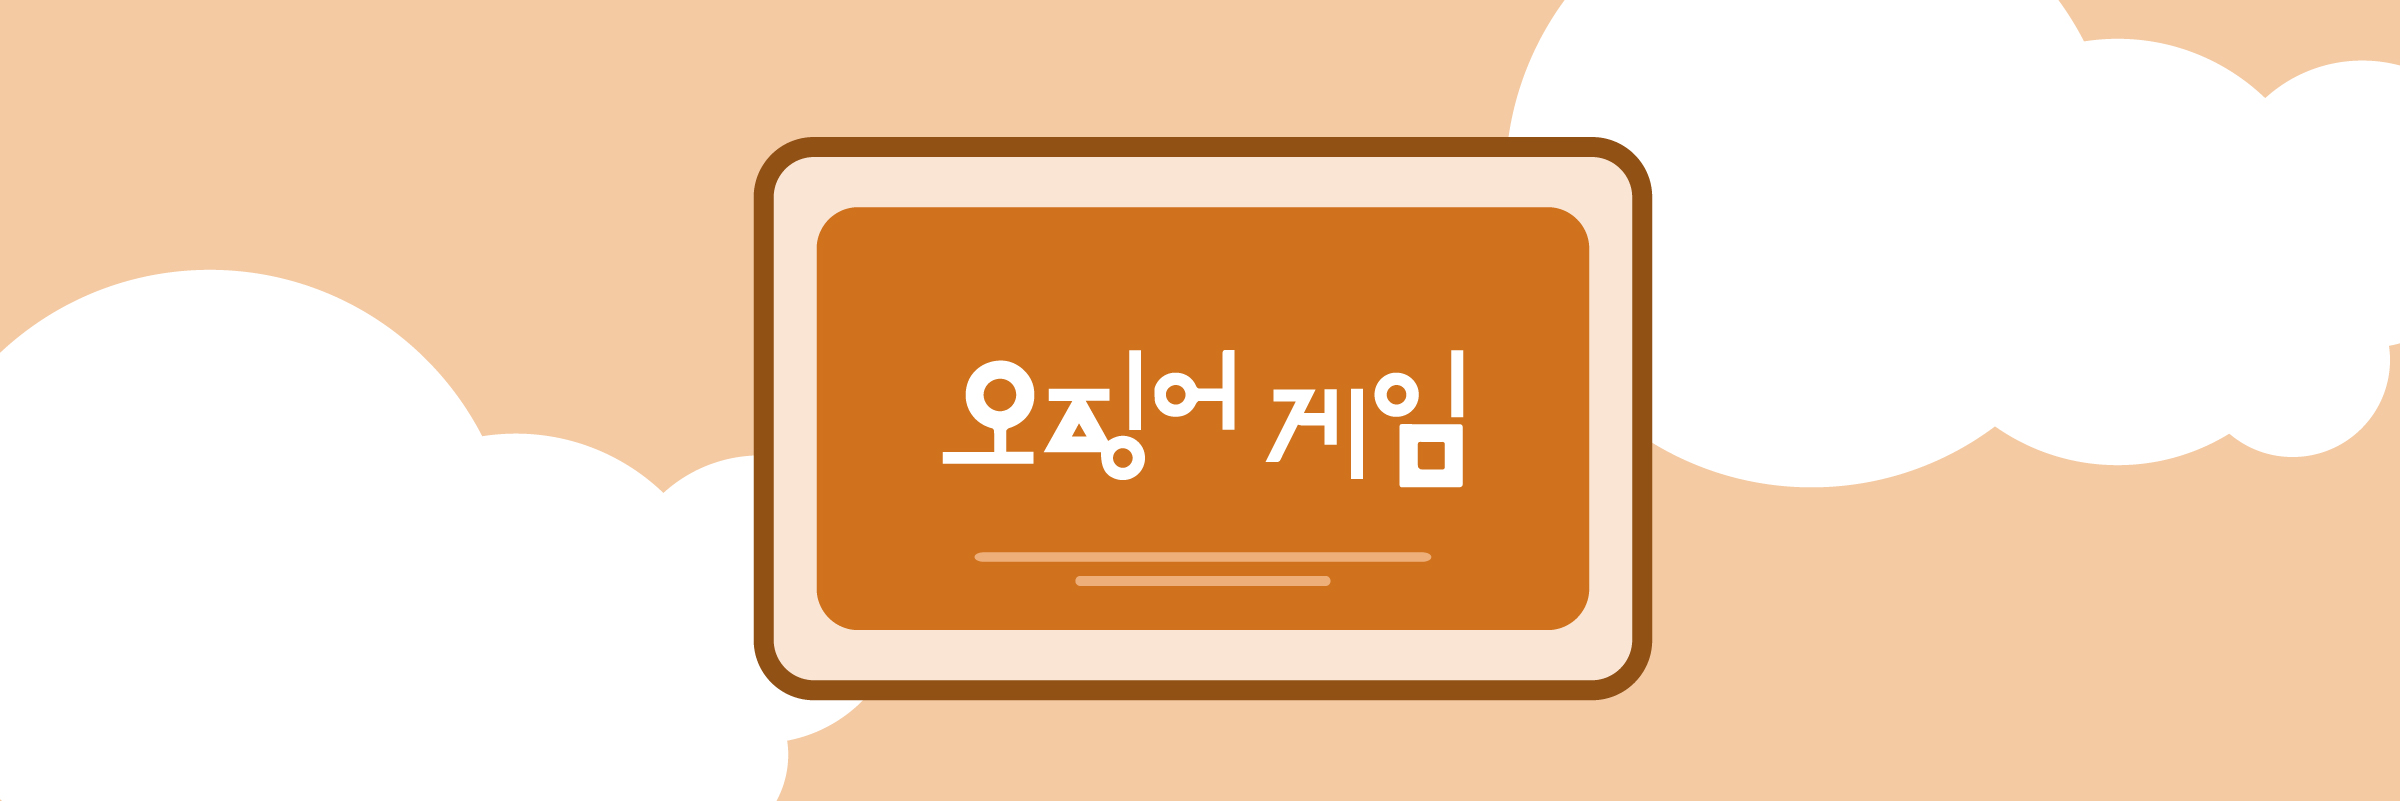 SquidGame korean translation